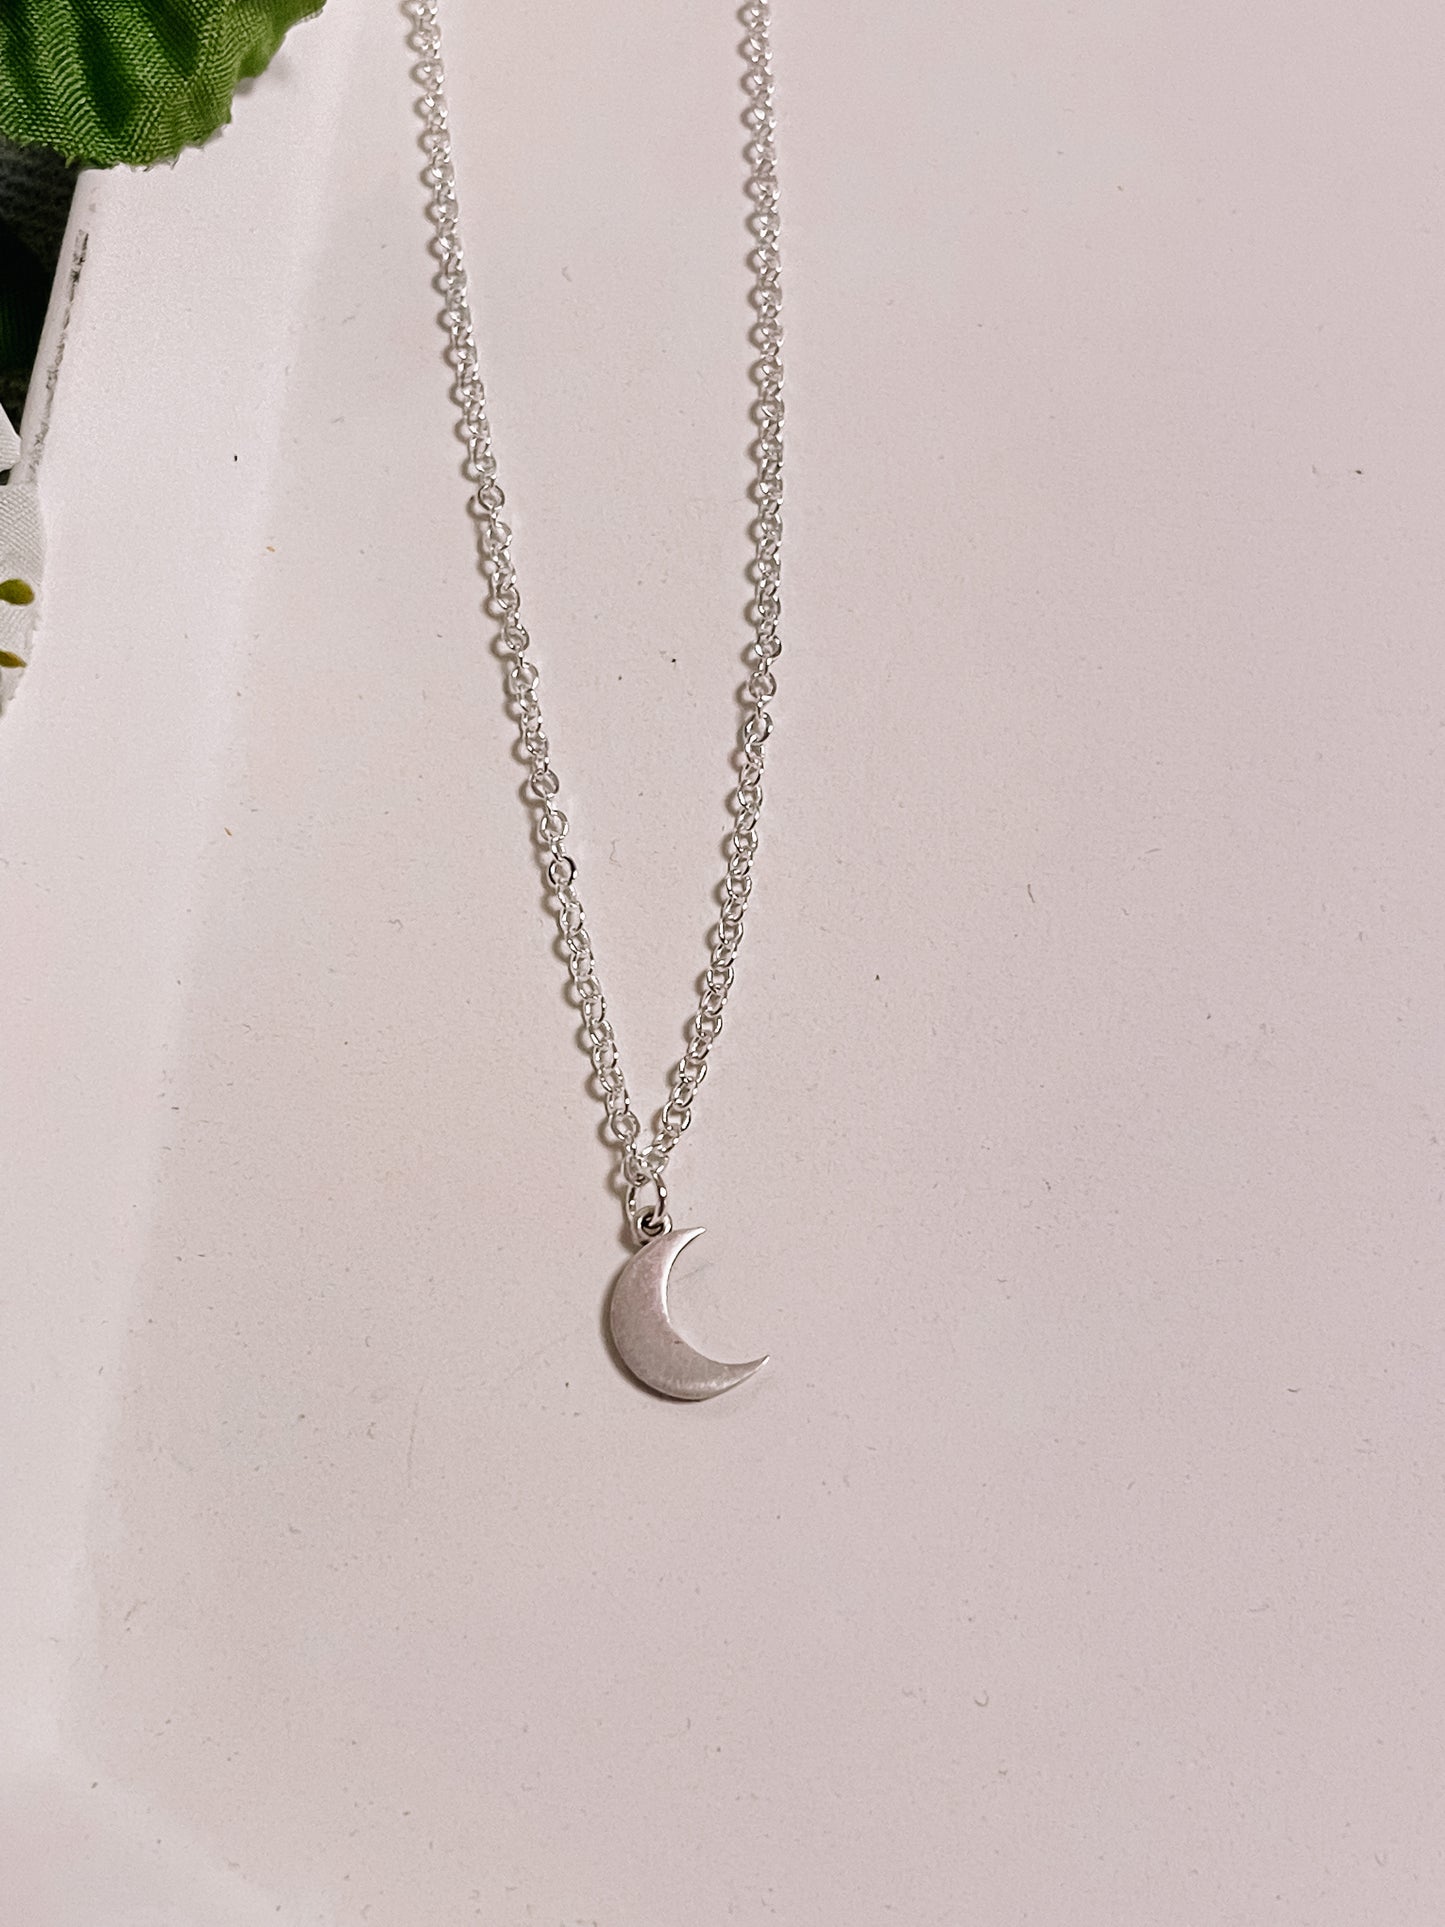 Little moon charm necklace